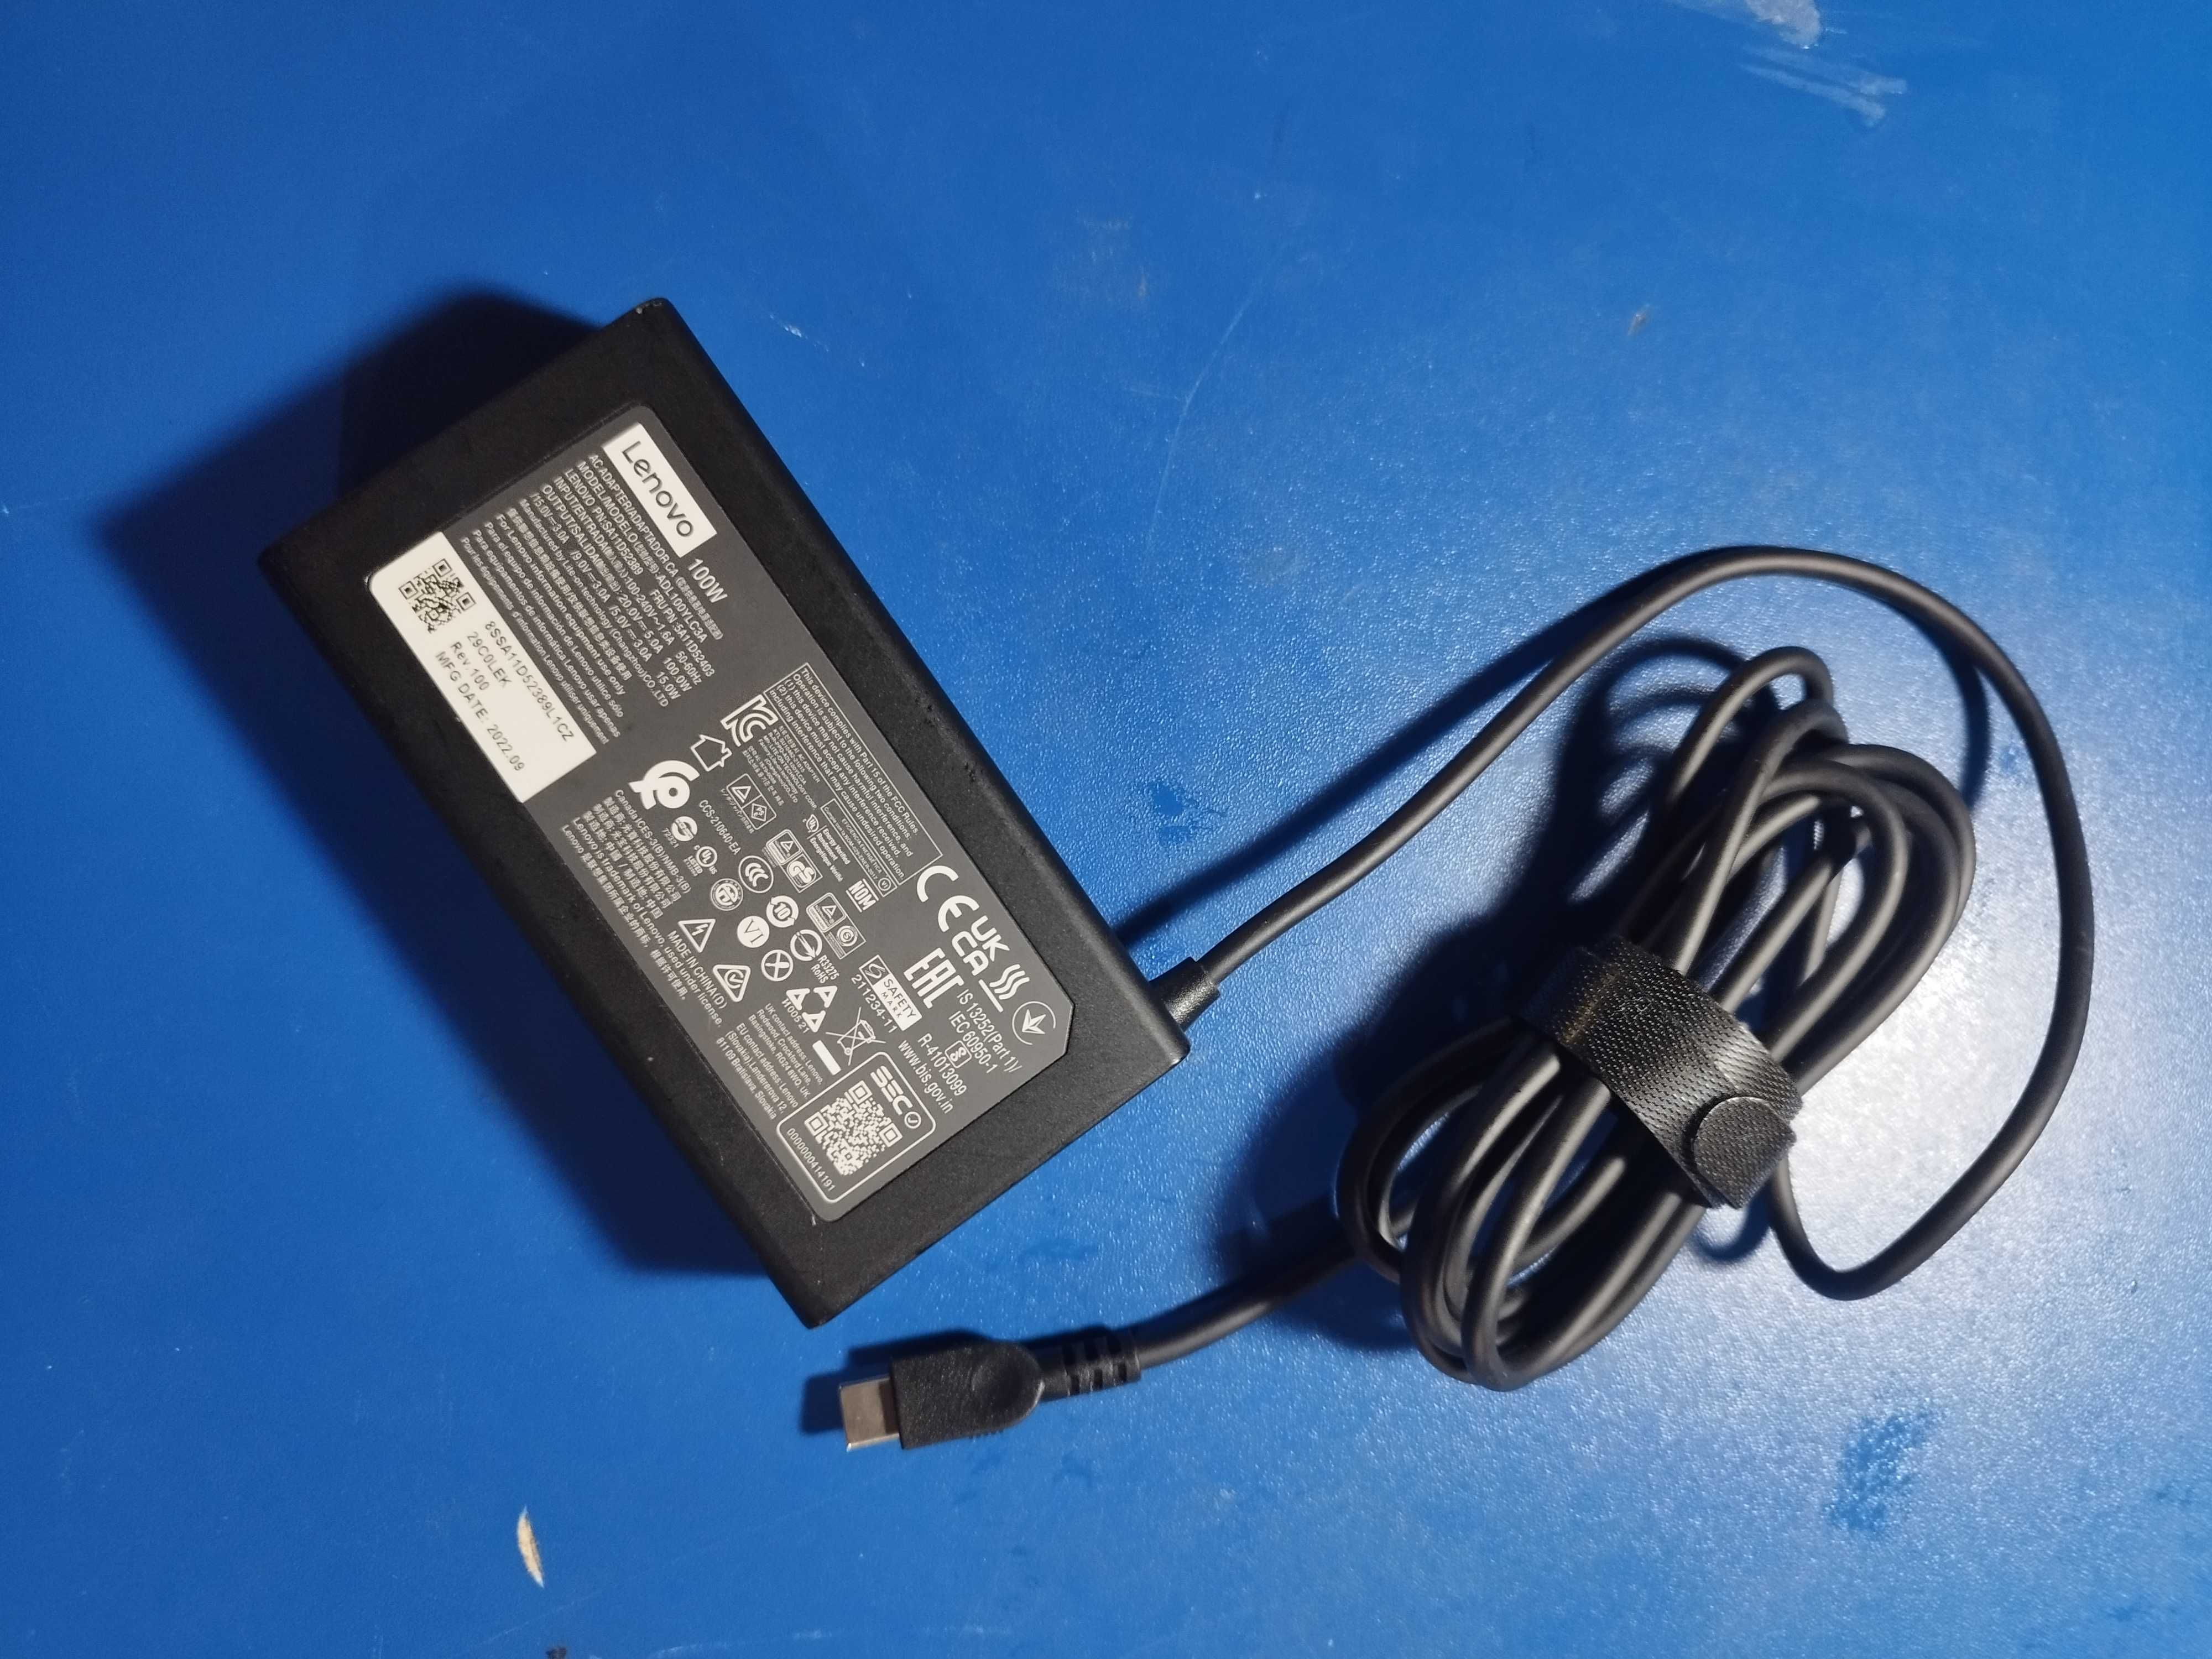 Incarcator USB-C lenovo 100 W, nou, garantie 1 an